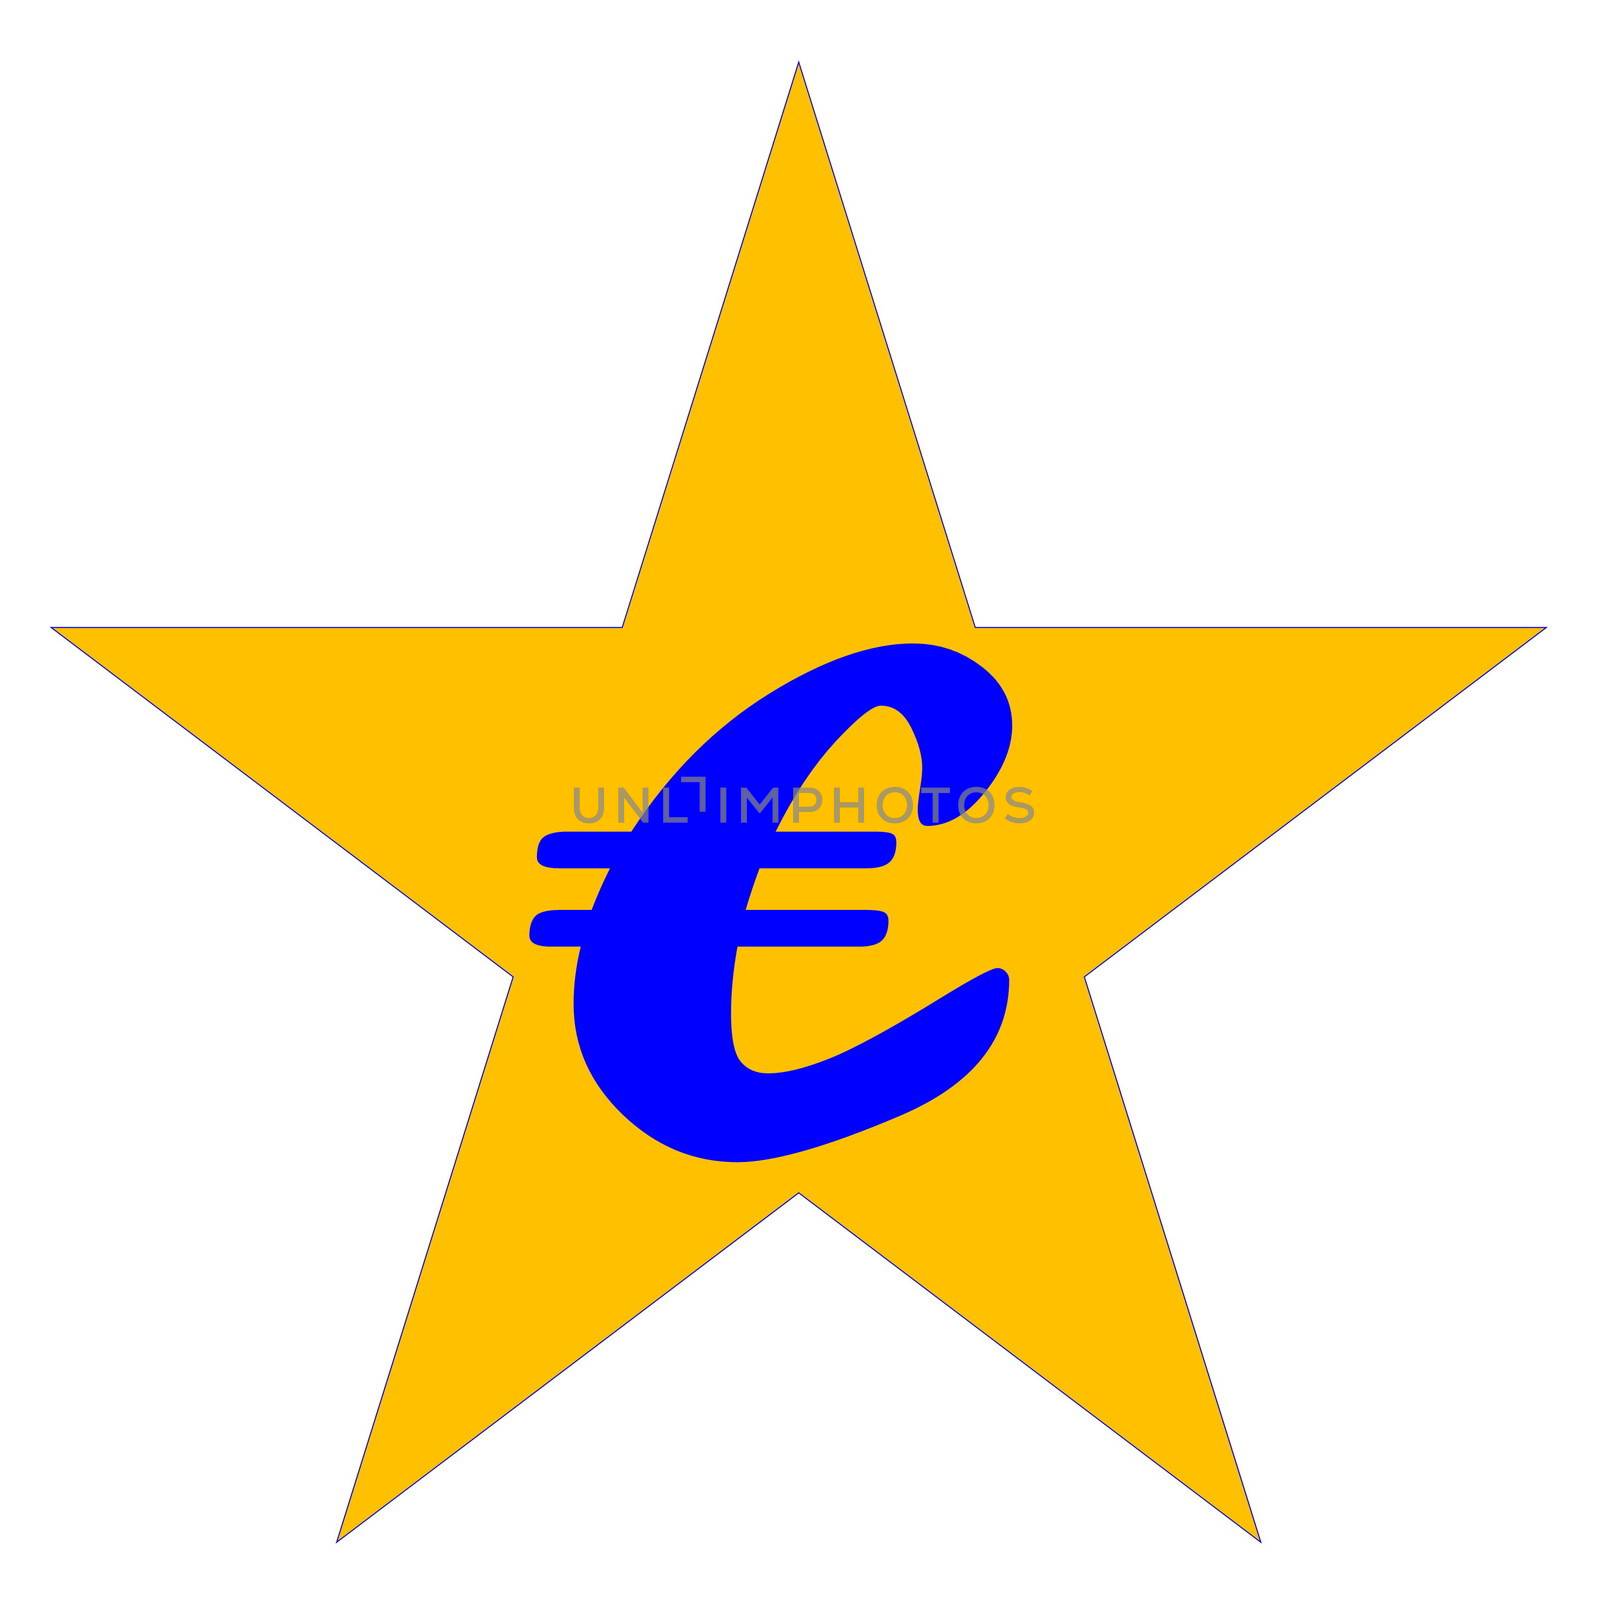 European community symbol by Elenaphotos21